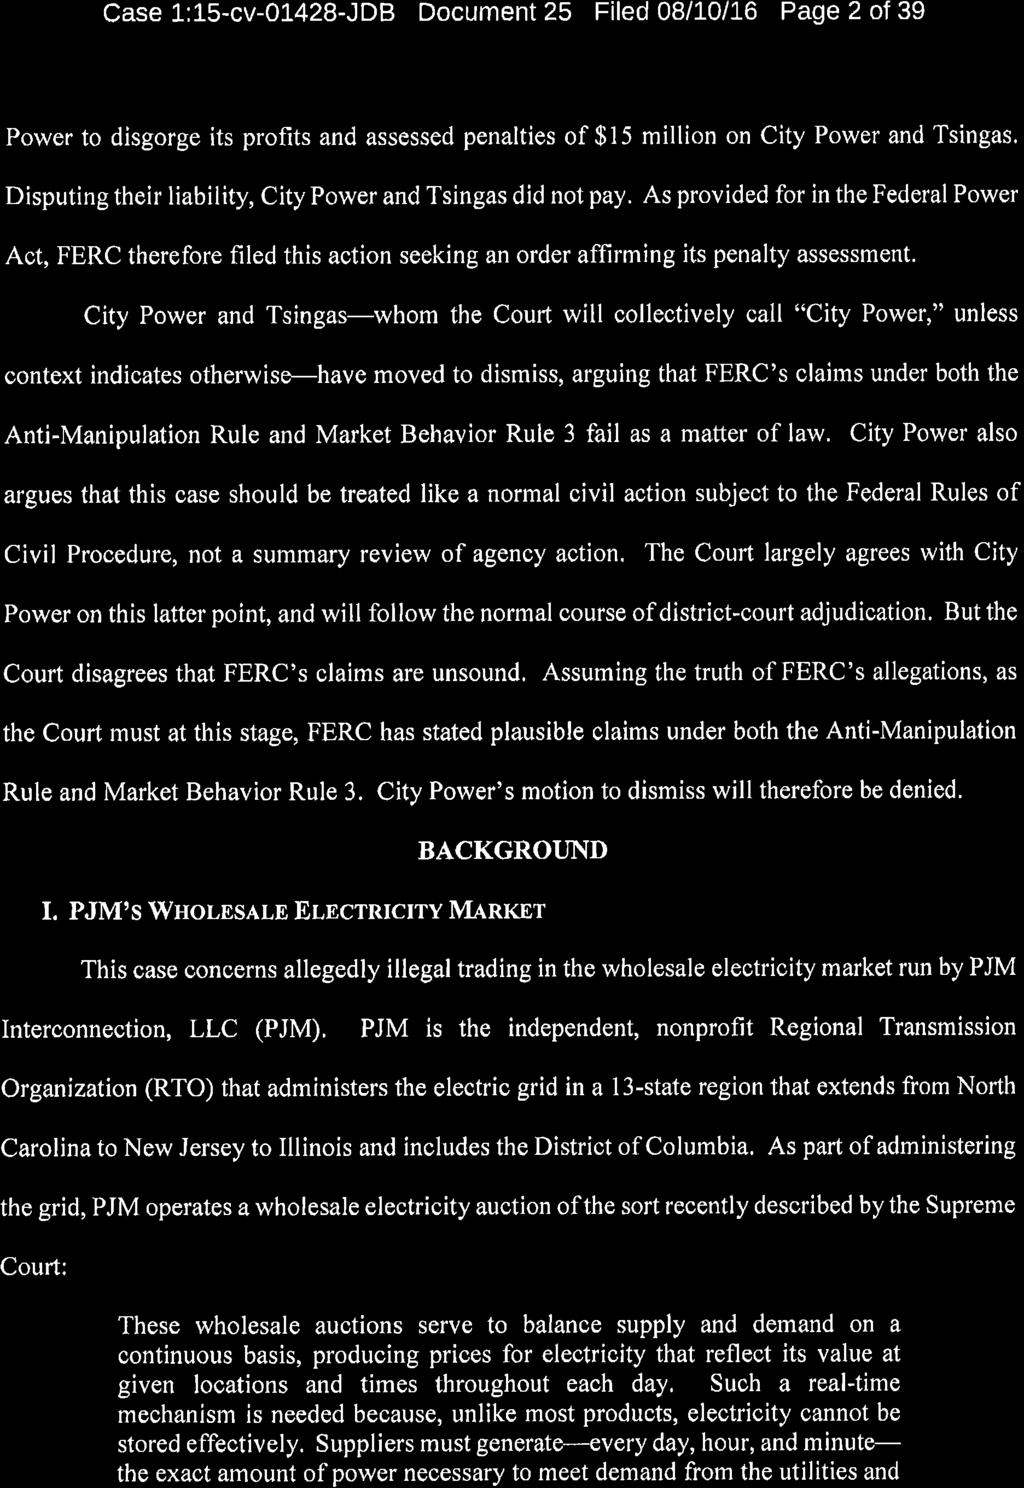 Case 3:15-cv-00452-MHL Document 69-1